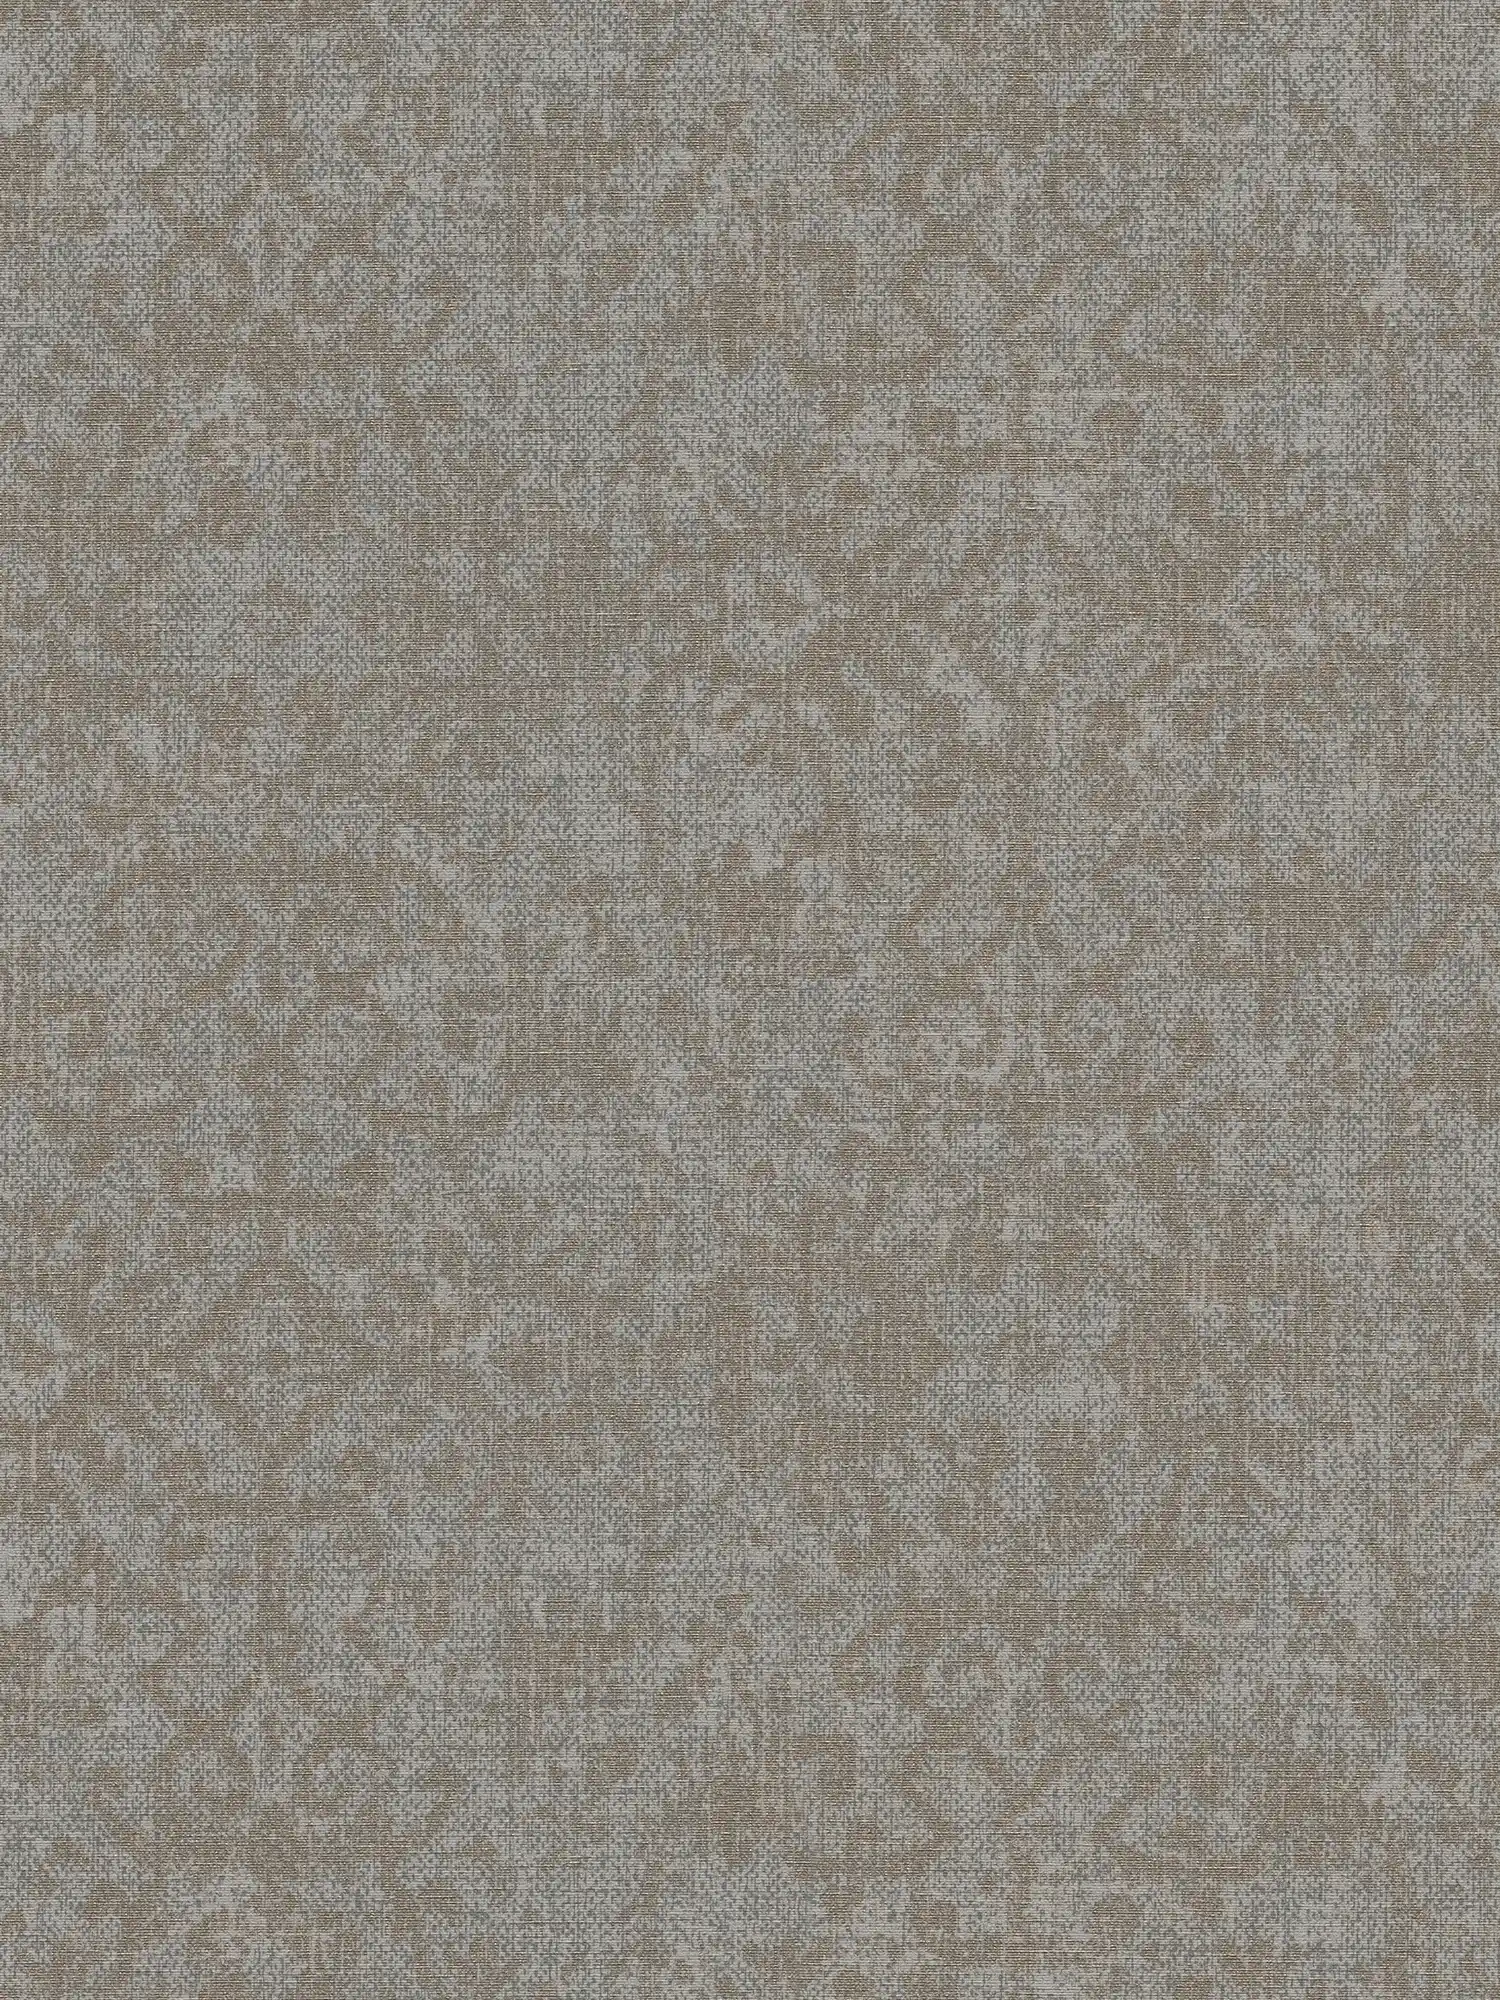         Papel pintado étnico gris-marrón con aspecto textil brocado
    